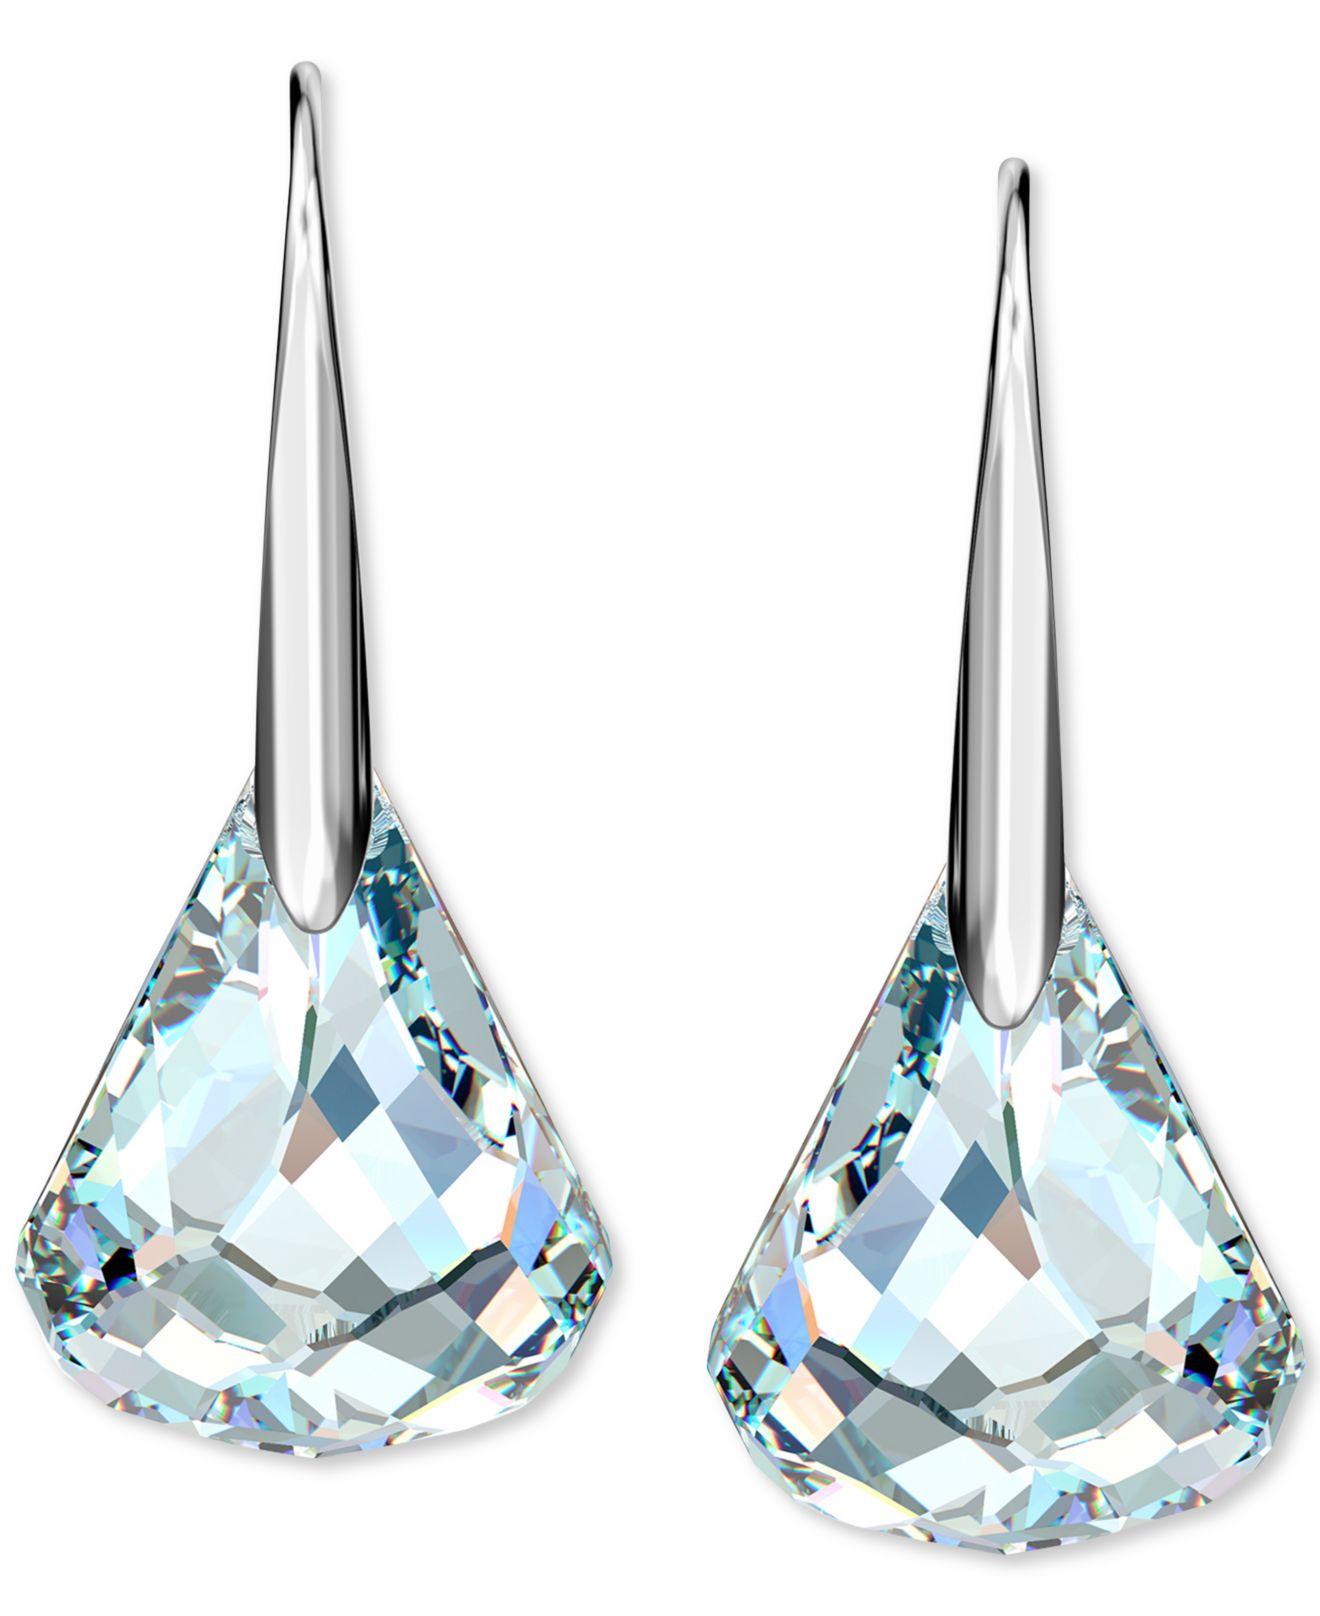 Swarovski Silver-tone Crystal Circle Stud Earrings In White